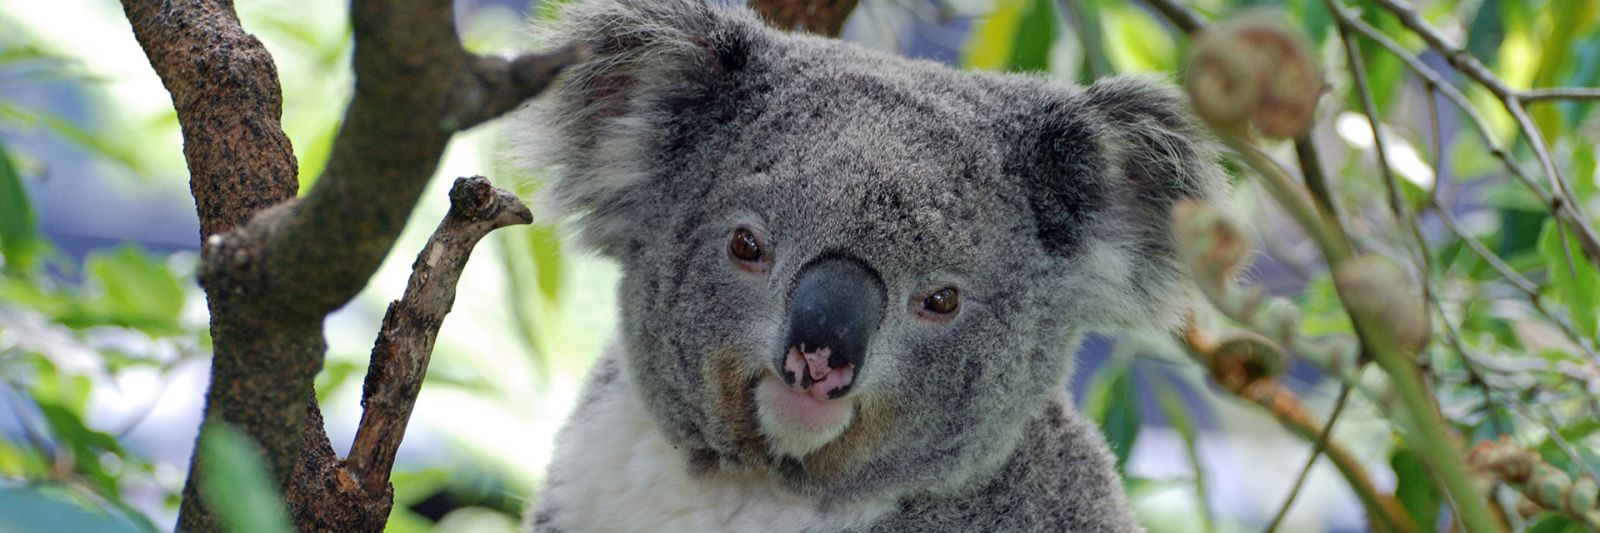 Koala conservation on Port Stephens Drive banner image